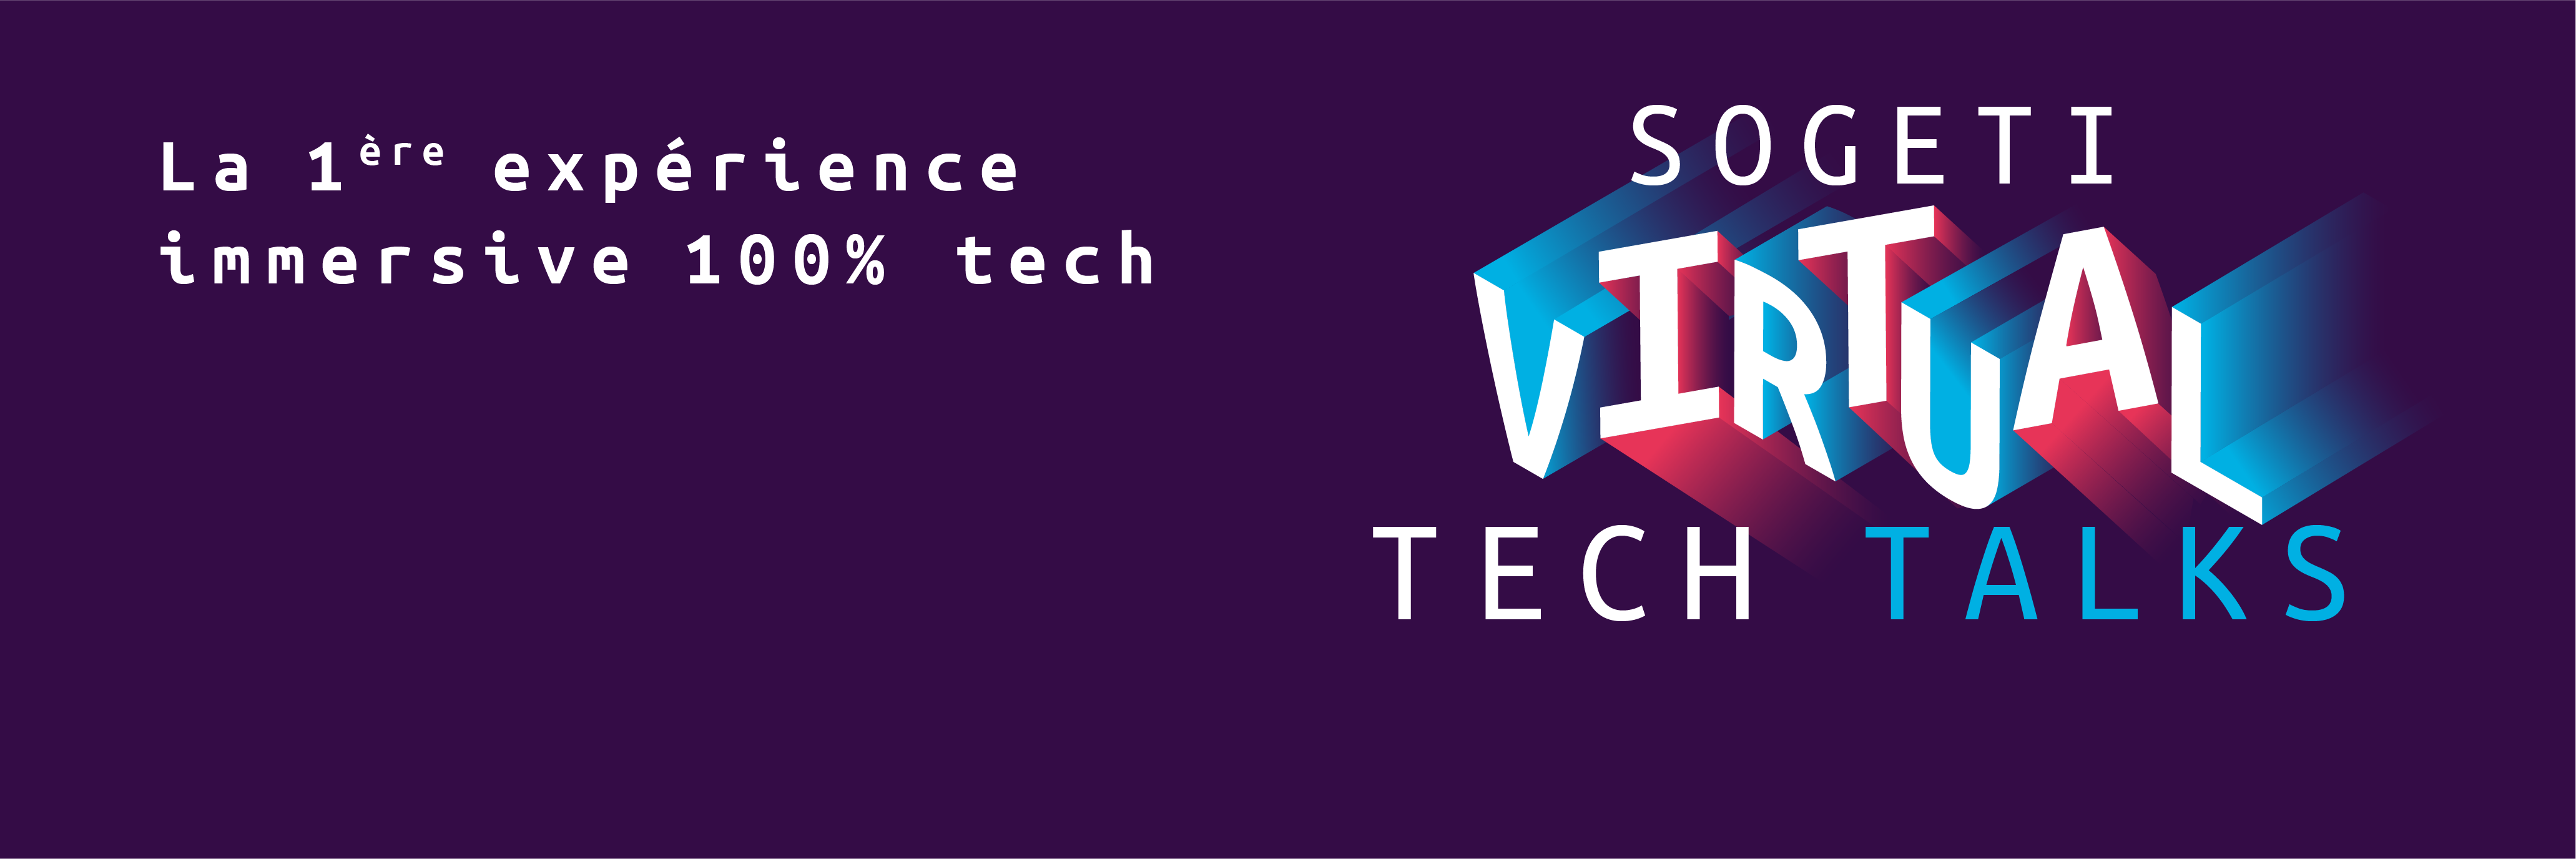 Sogeti Virtual Tech Talks